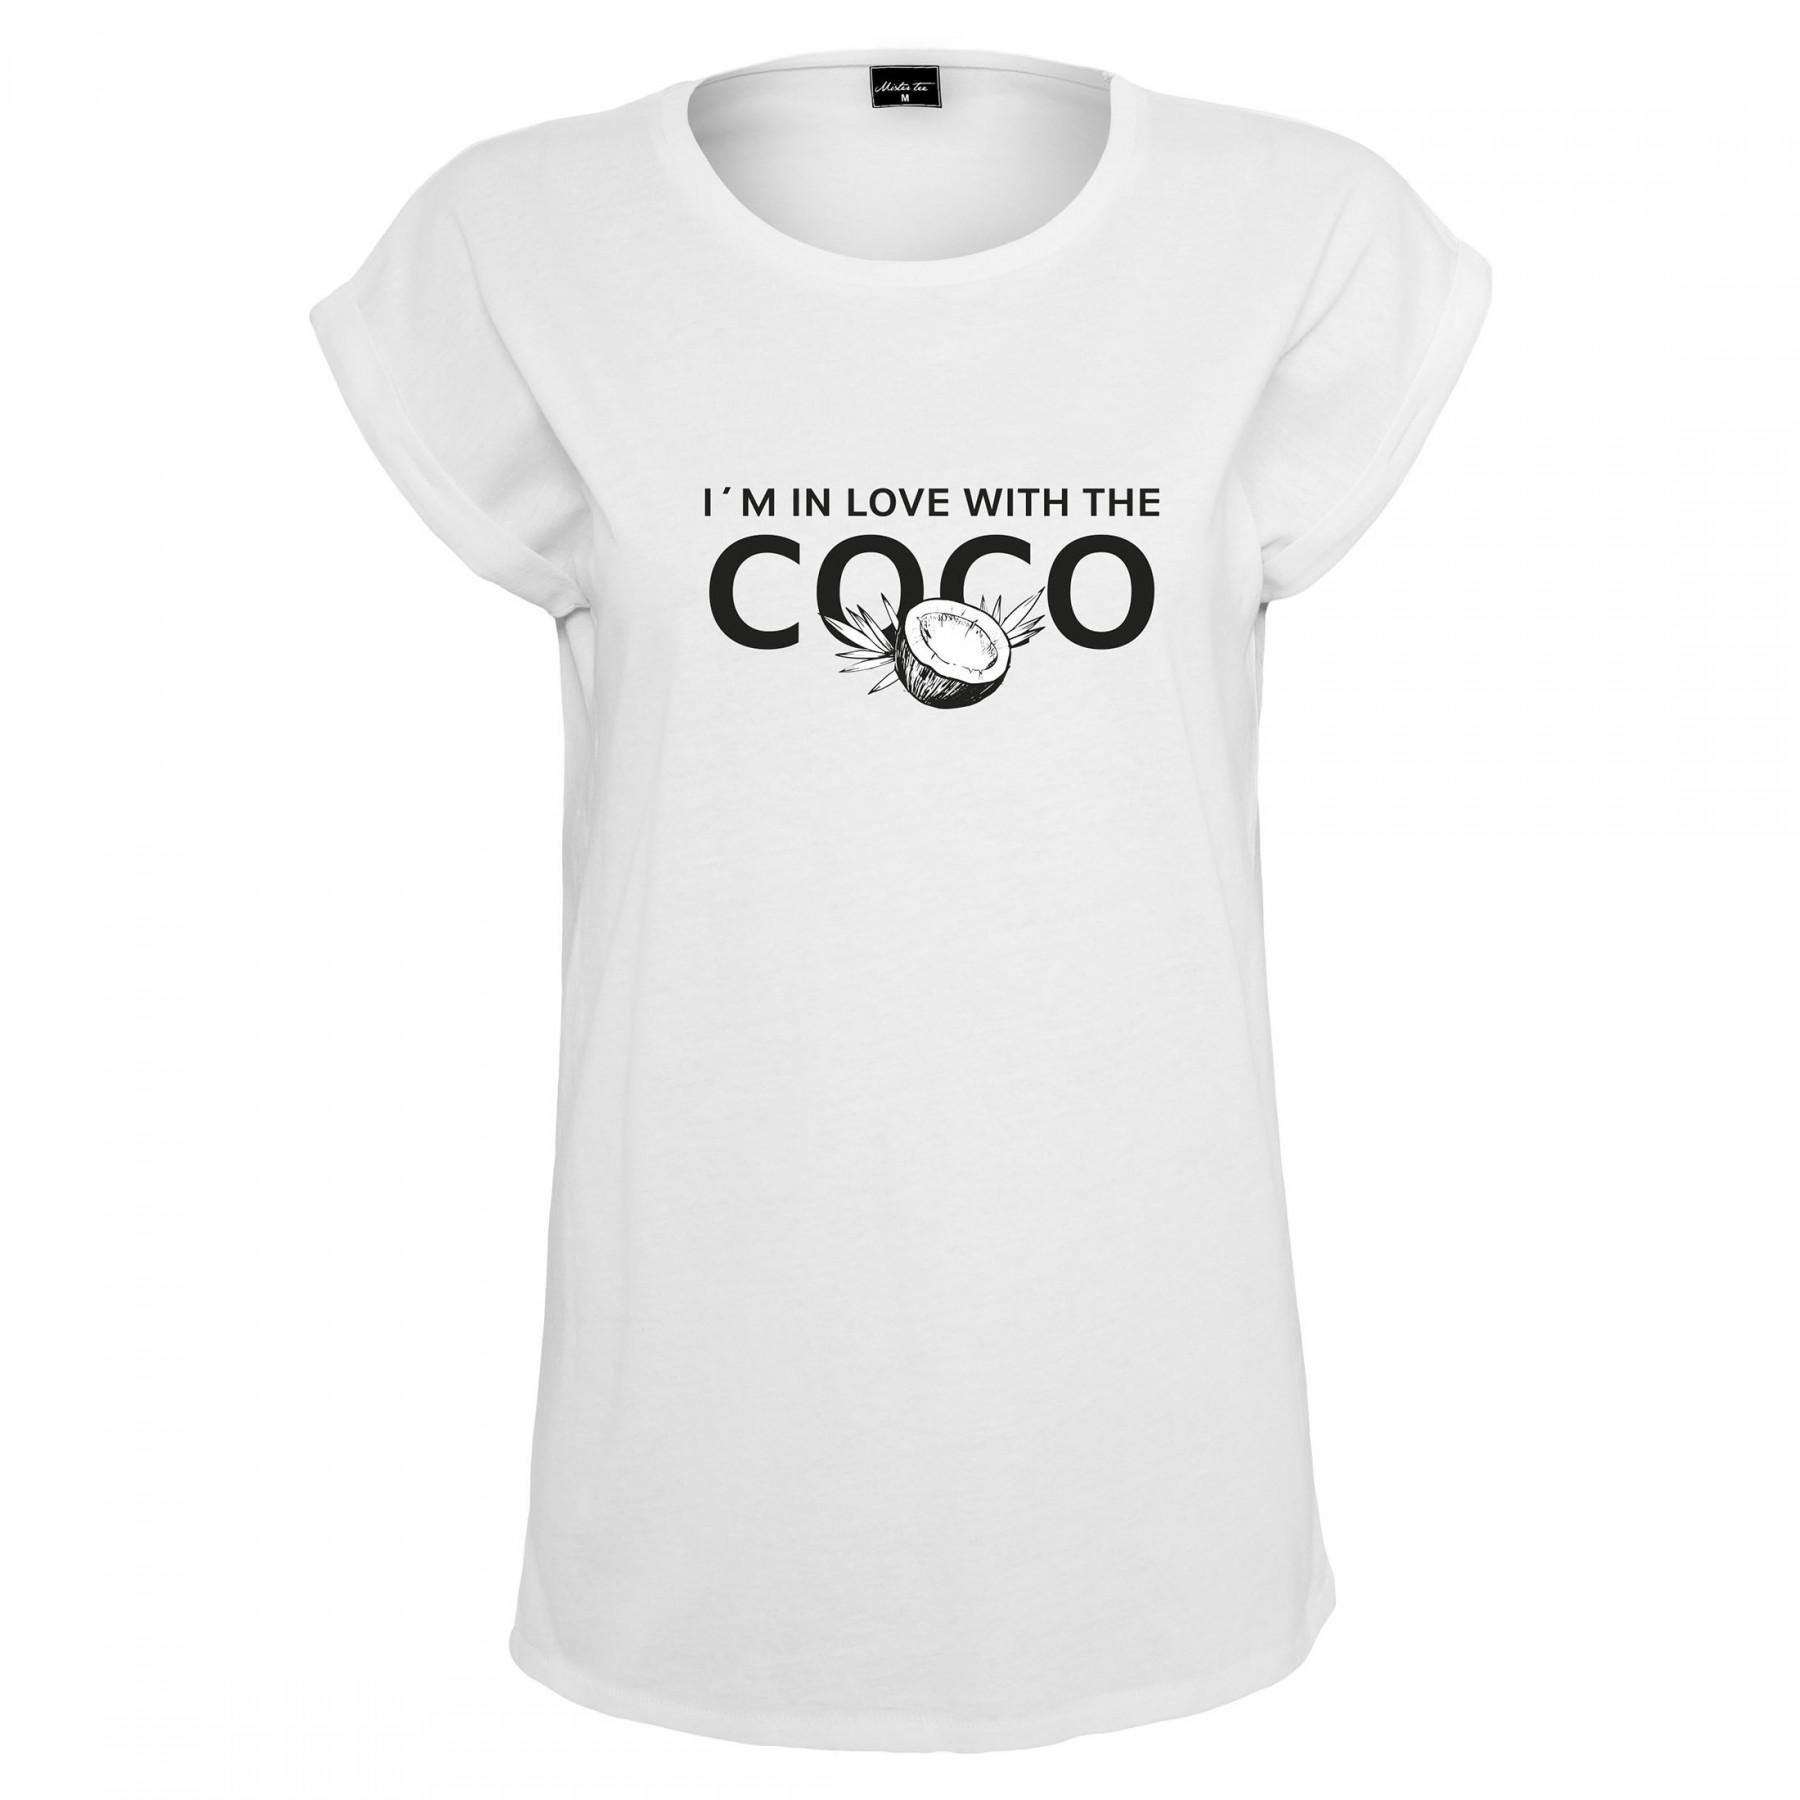 Camiseta de mujer Mister Tee coco